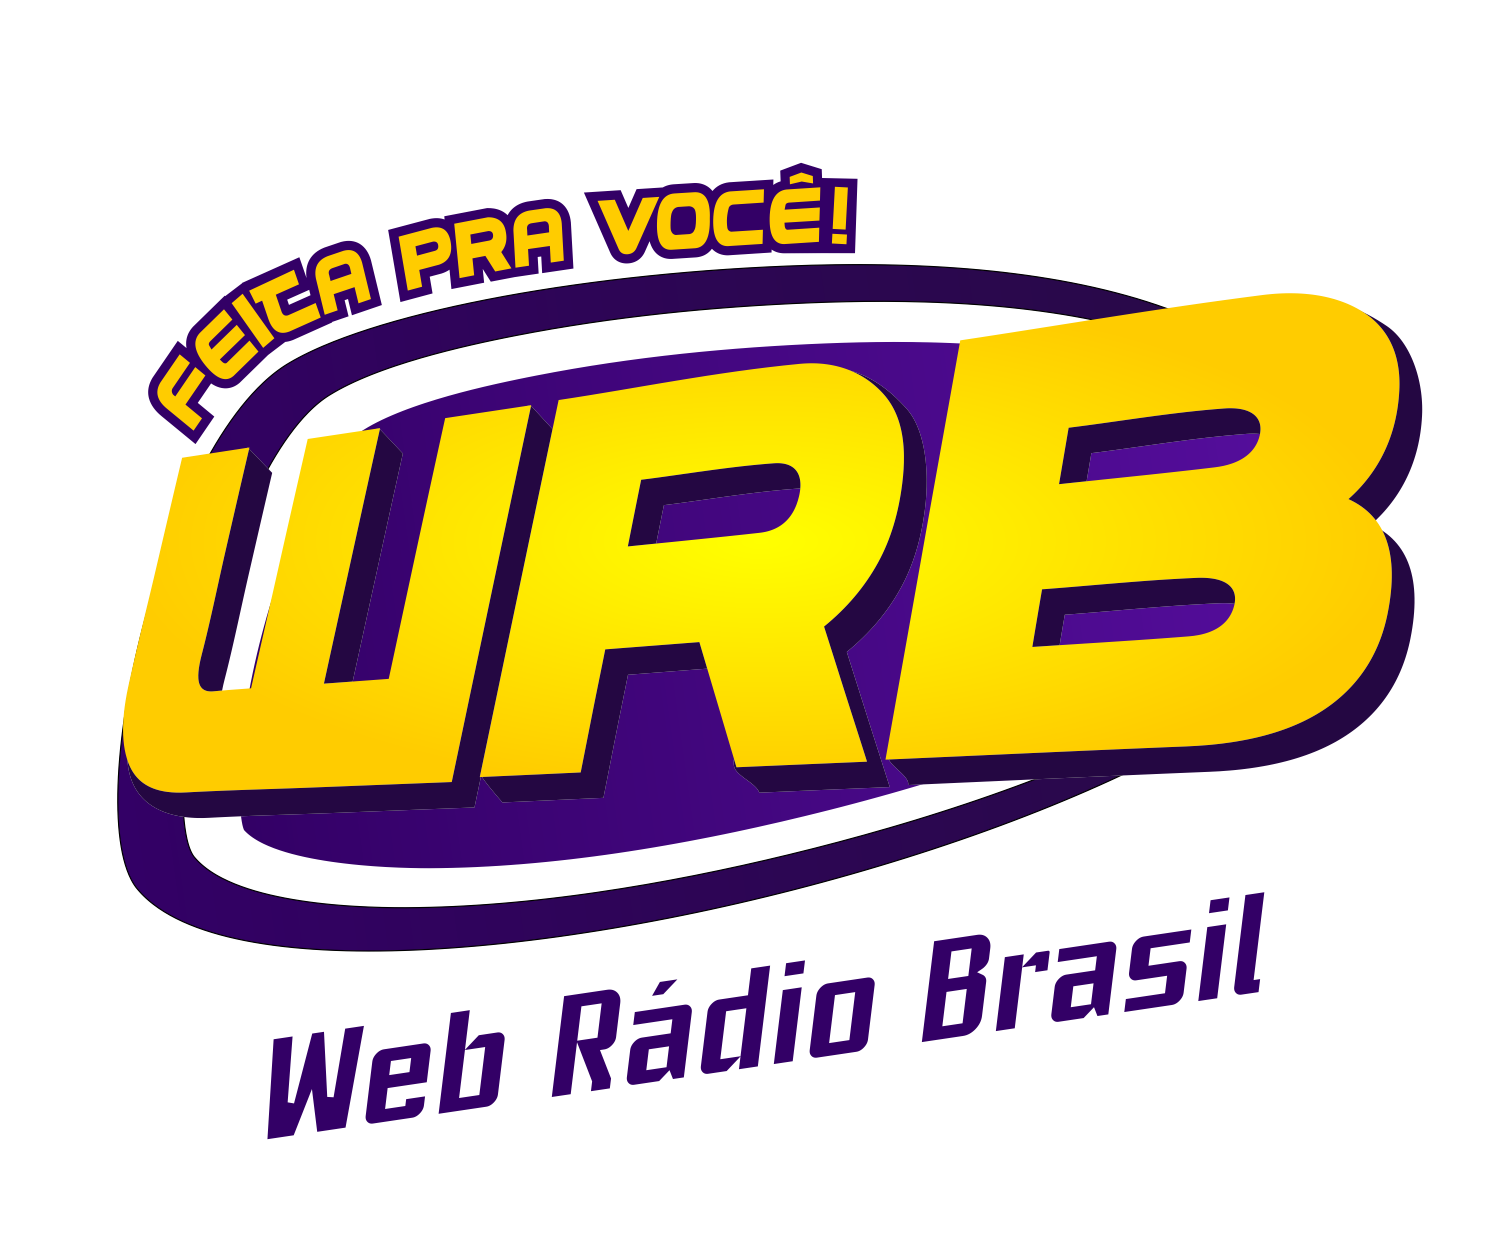 WEB- WEB RADIO BRASIL